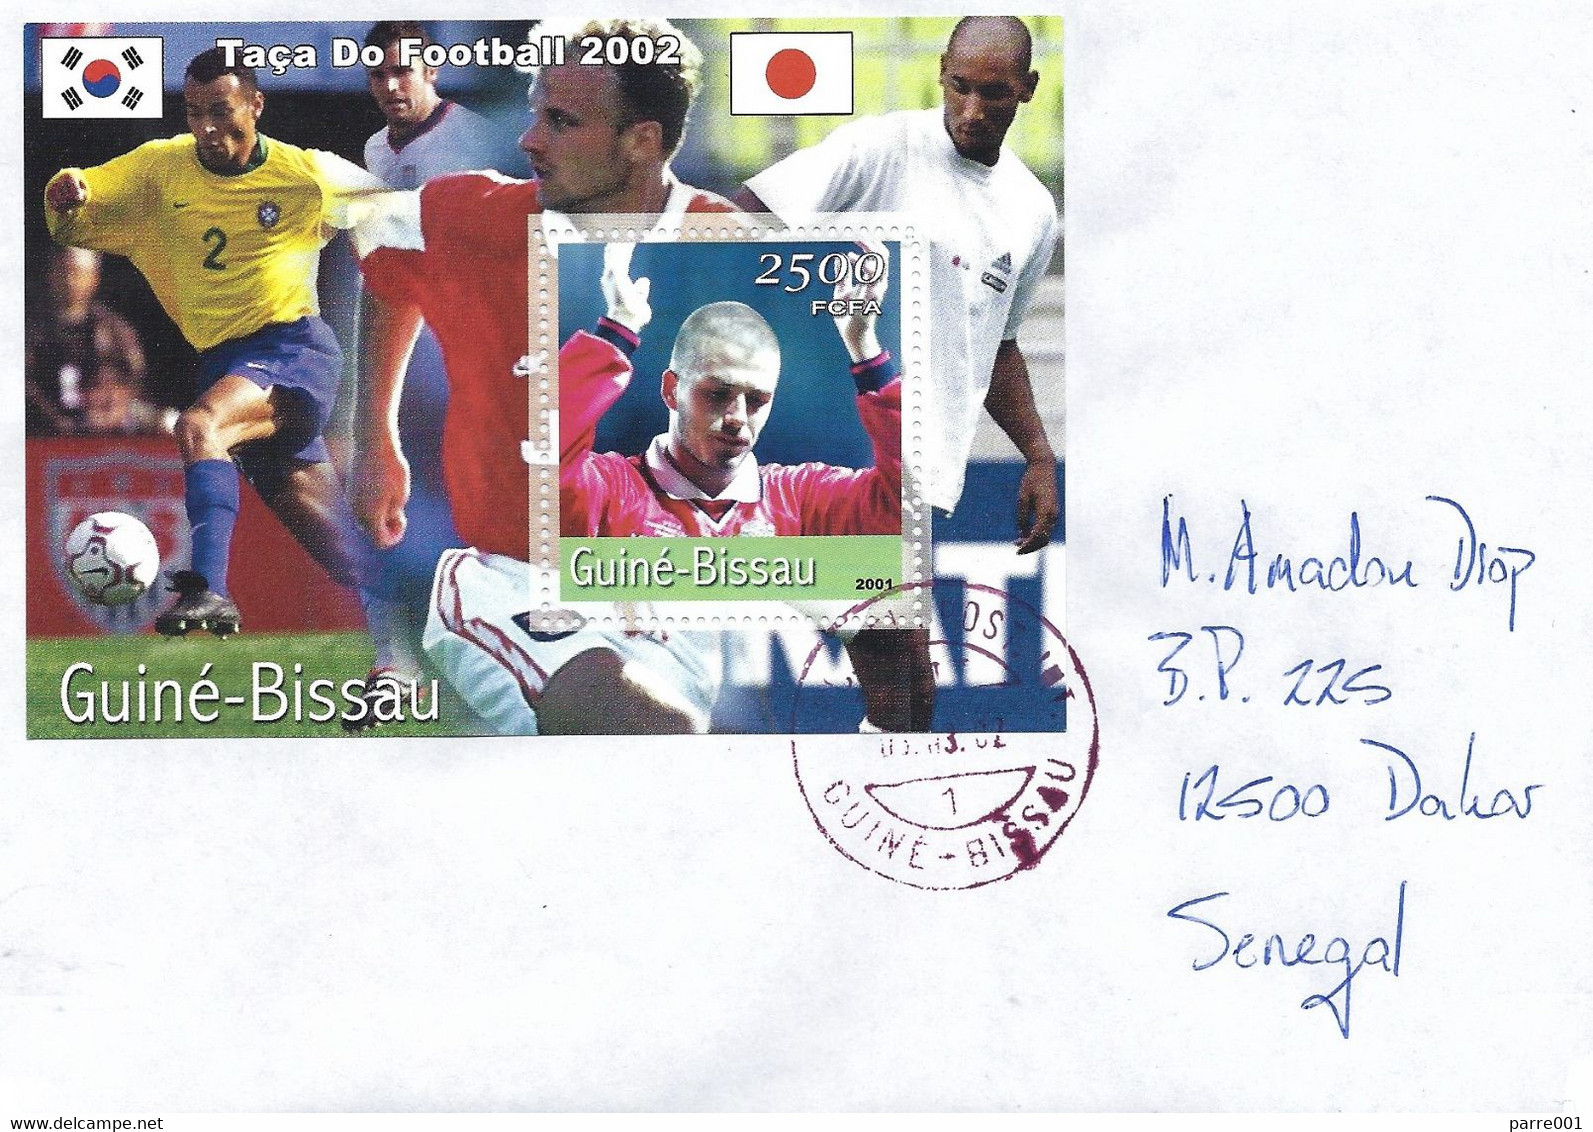 Guinea Bissau 2002 David Beckham England Dennis Bergkamp Netherlands Cafu Brazil World Cup Football MS Cover - 2002 – South Korea / Japan